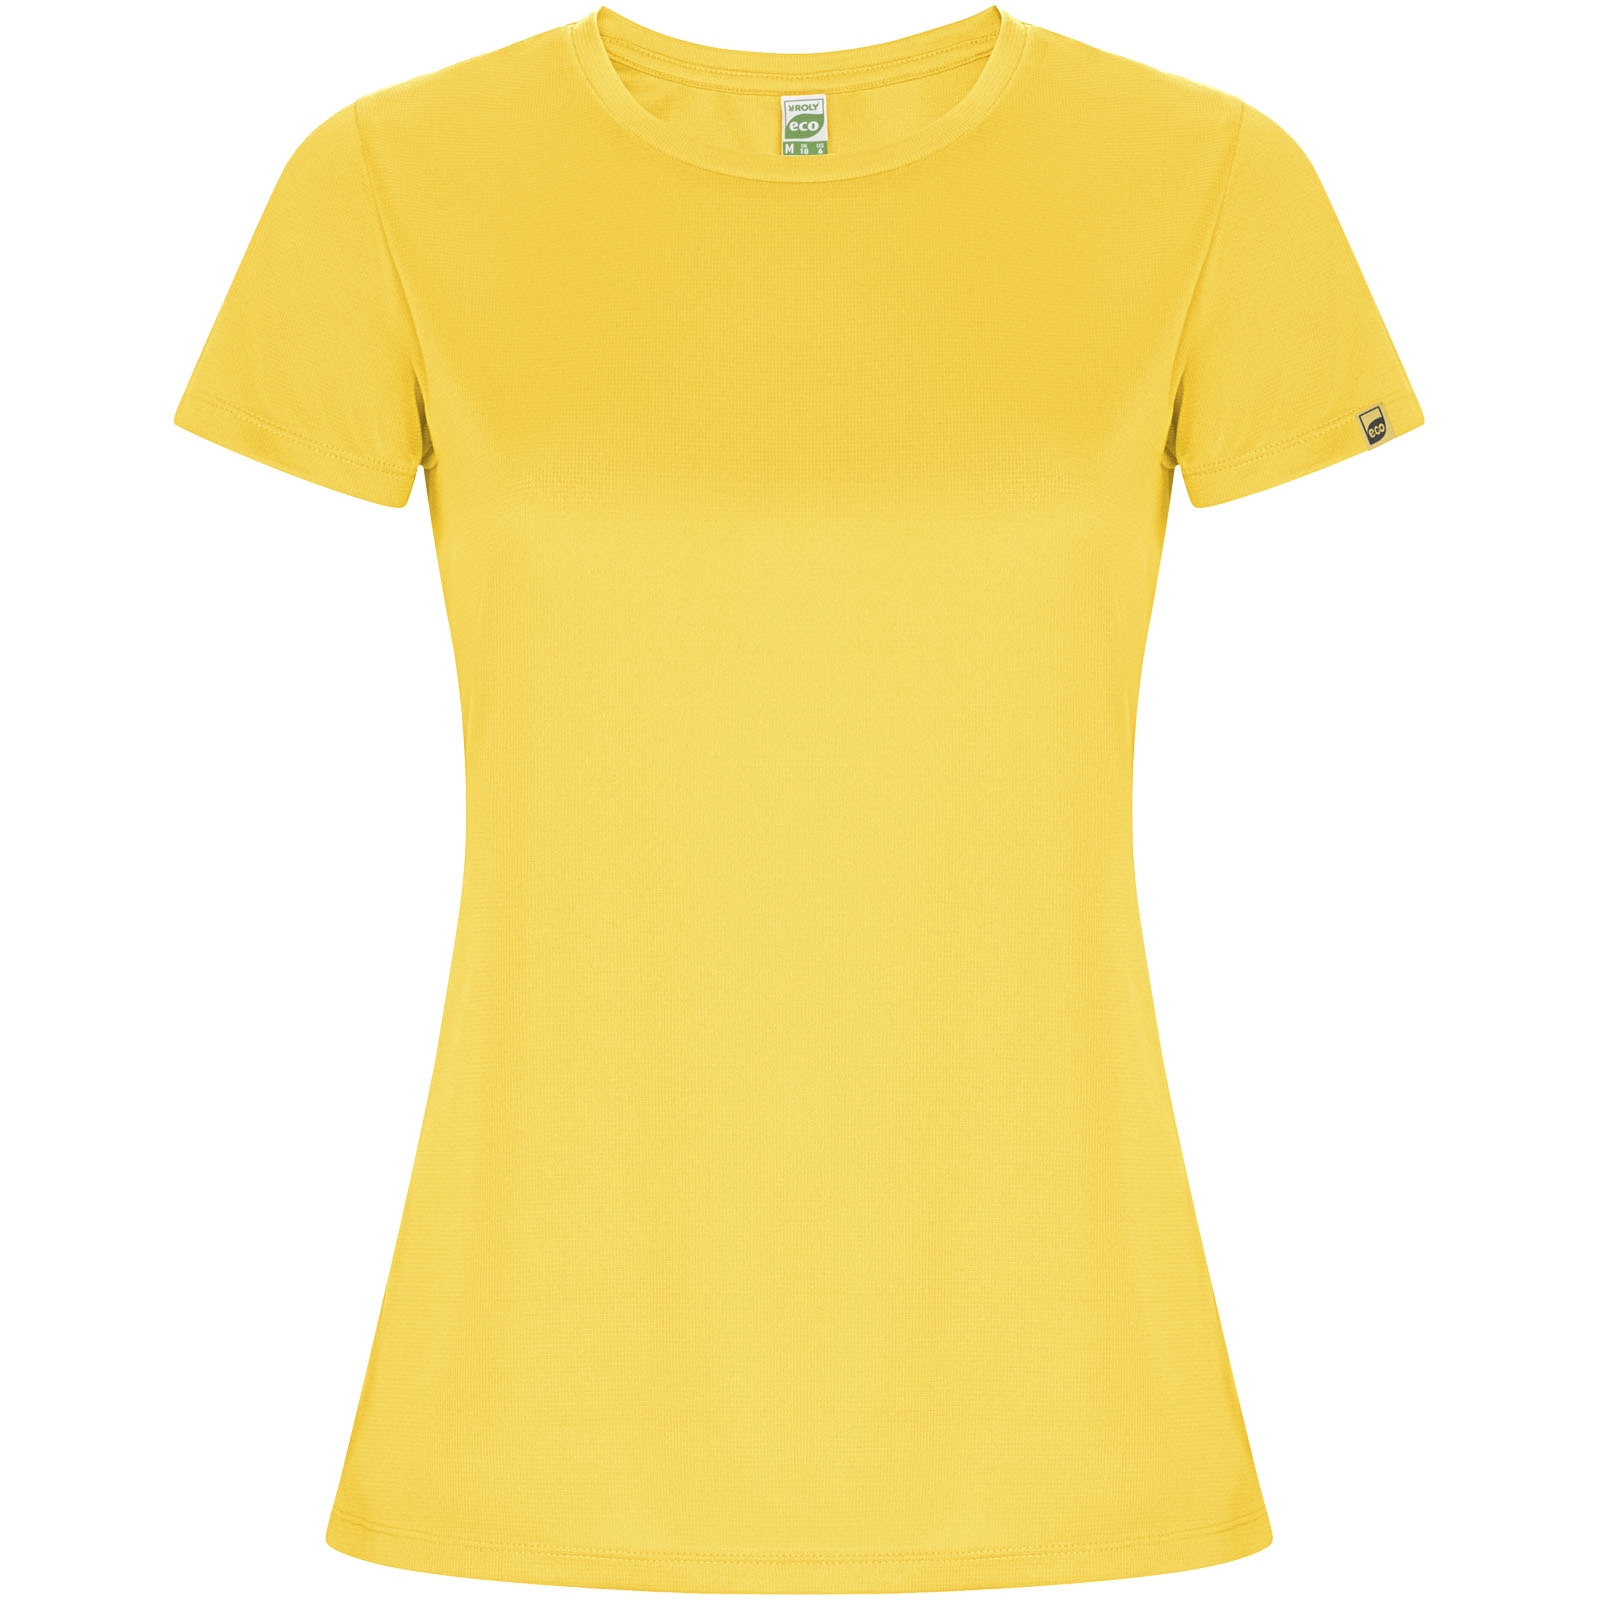 Advertising T-shirts - Imola short sleeve women's sports t-shirt - 0